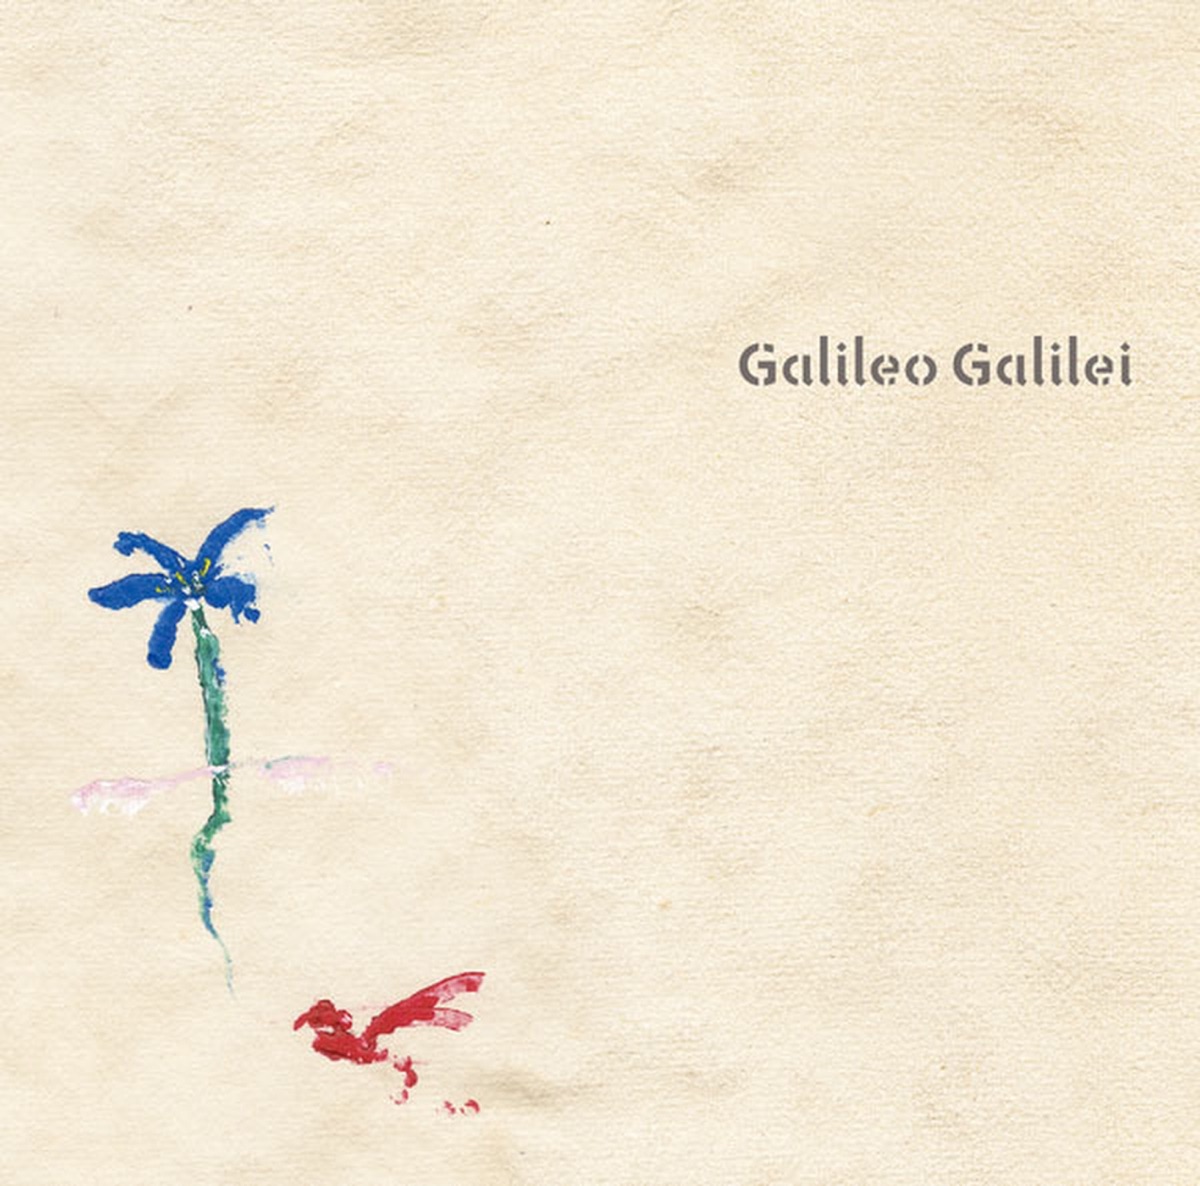 Cover art for『Galileo Galilei - Aoi Shiori』from the release『Aoi Shiori』